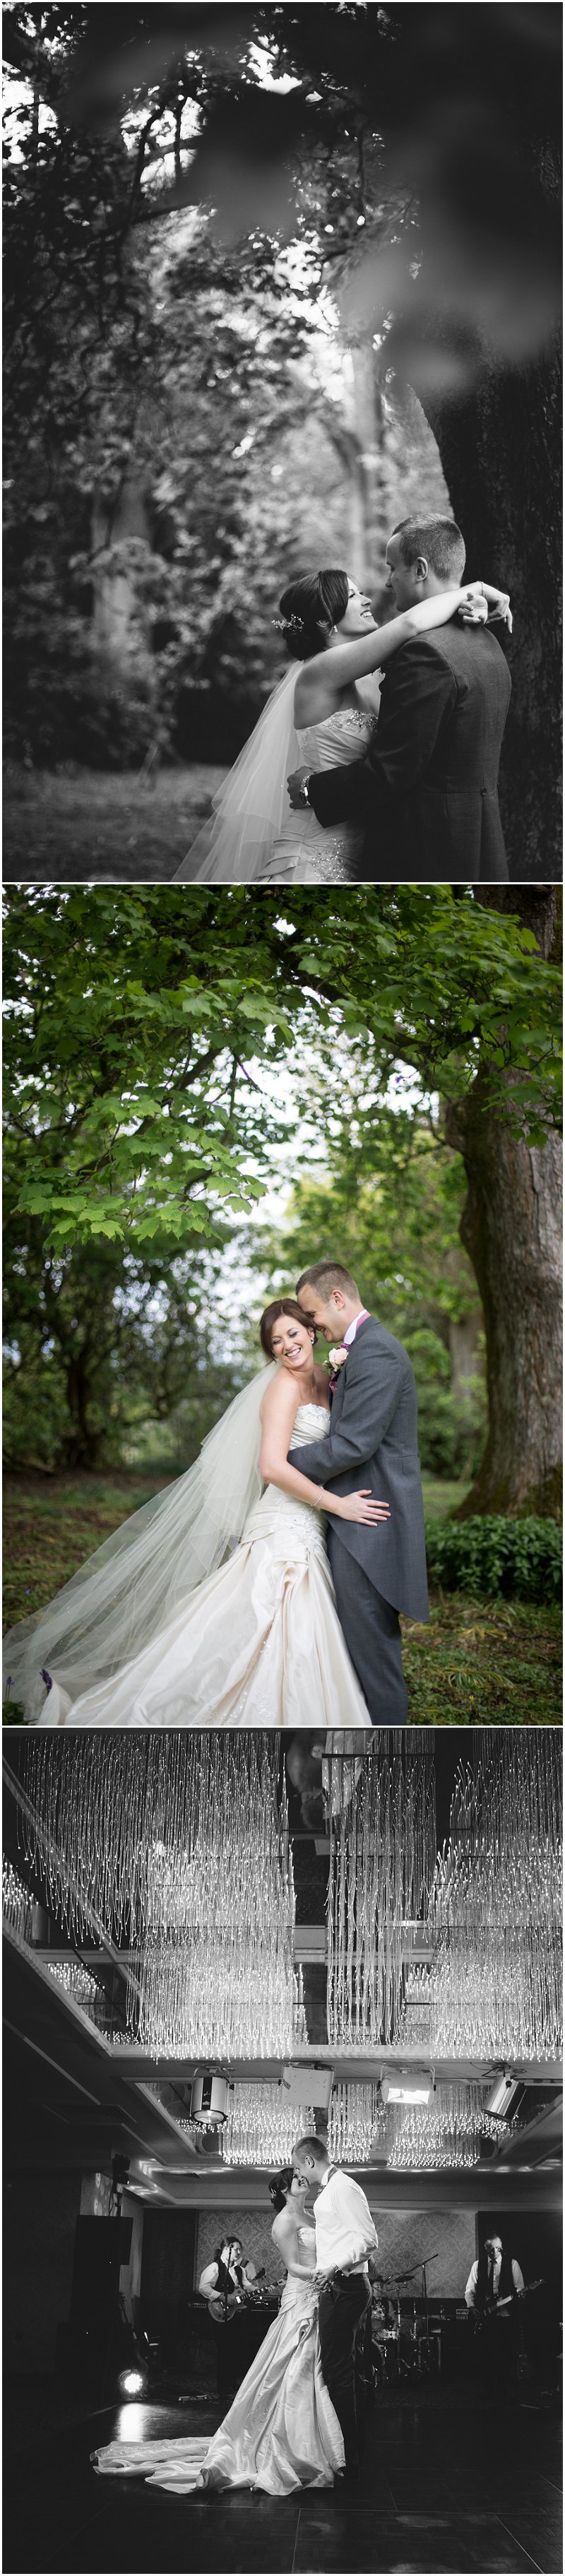 Gorgeous bride and groom portraits at Armathwaite Hall wedding | Photographer Cumbria